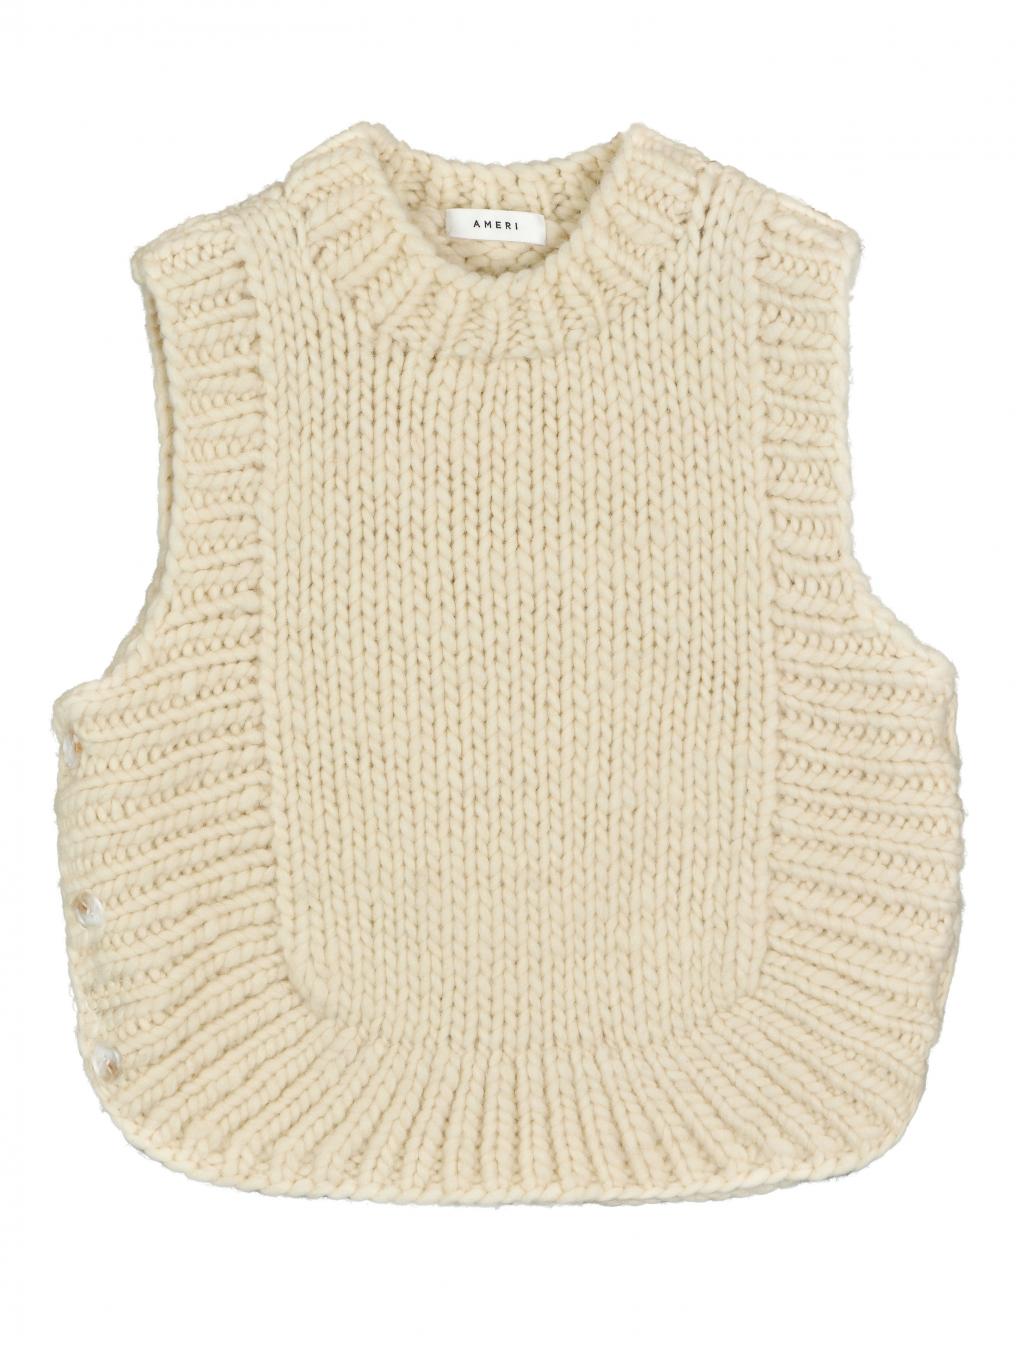 AMERI knit vest